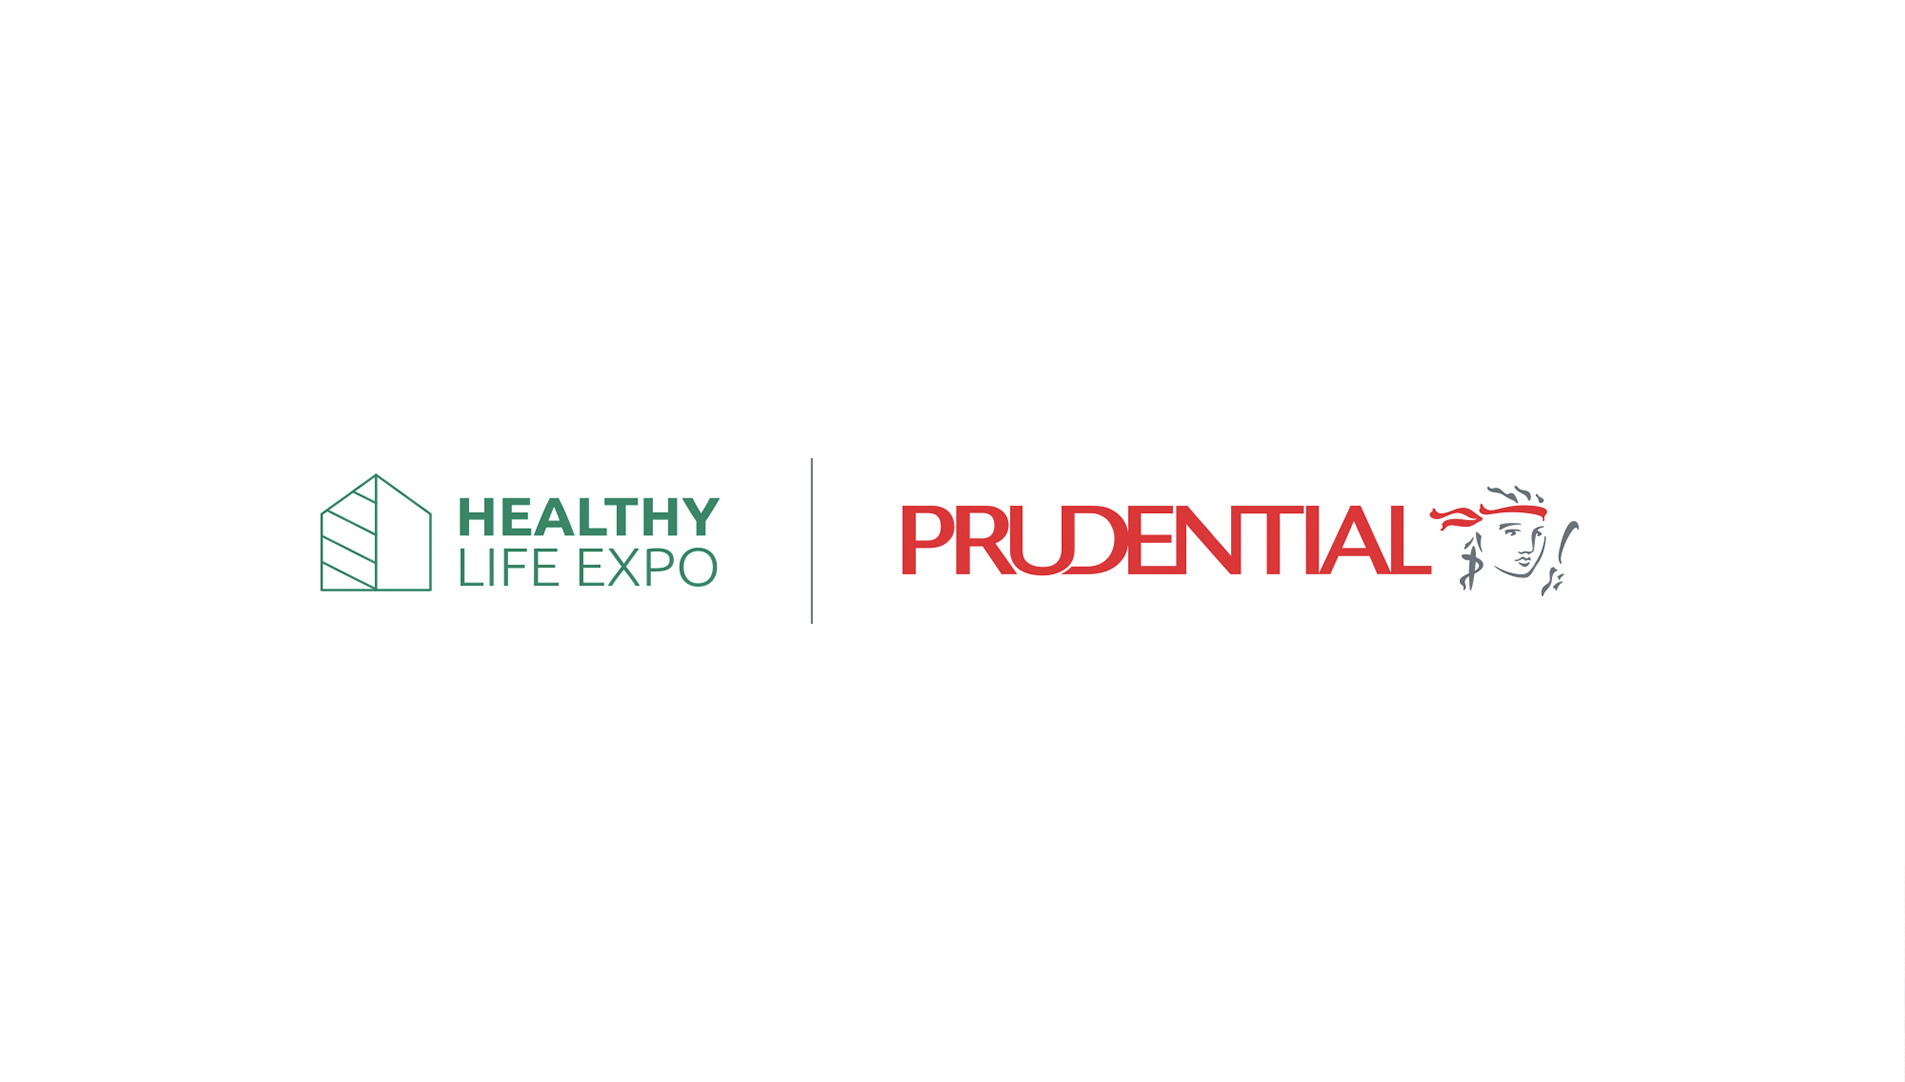 branding agency singapore prudential slideshow 04 - Prudential